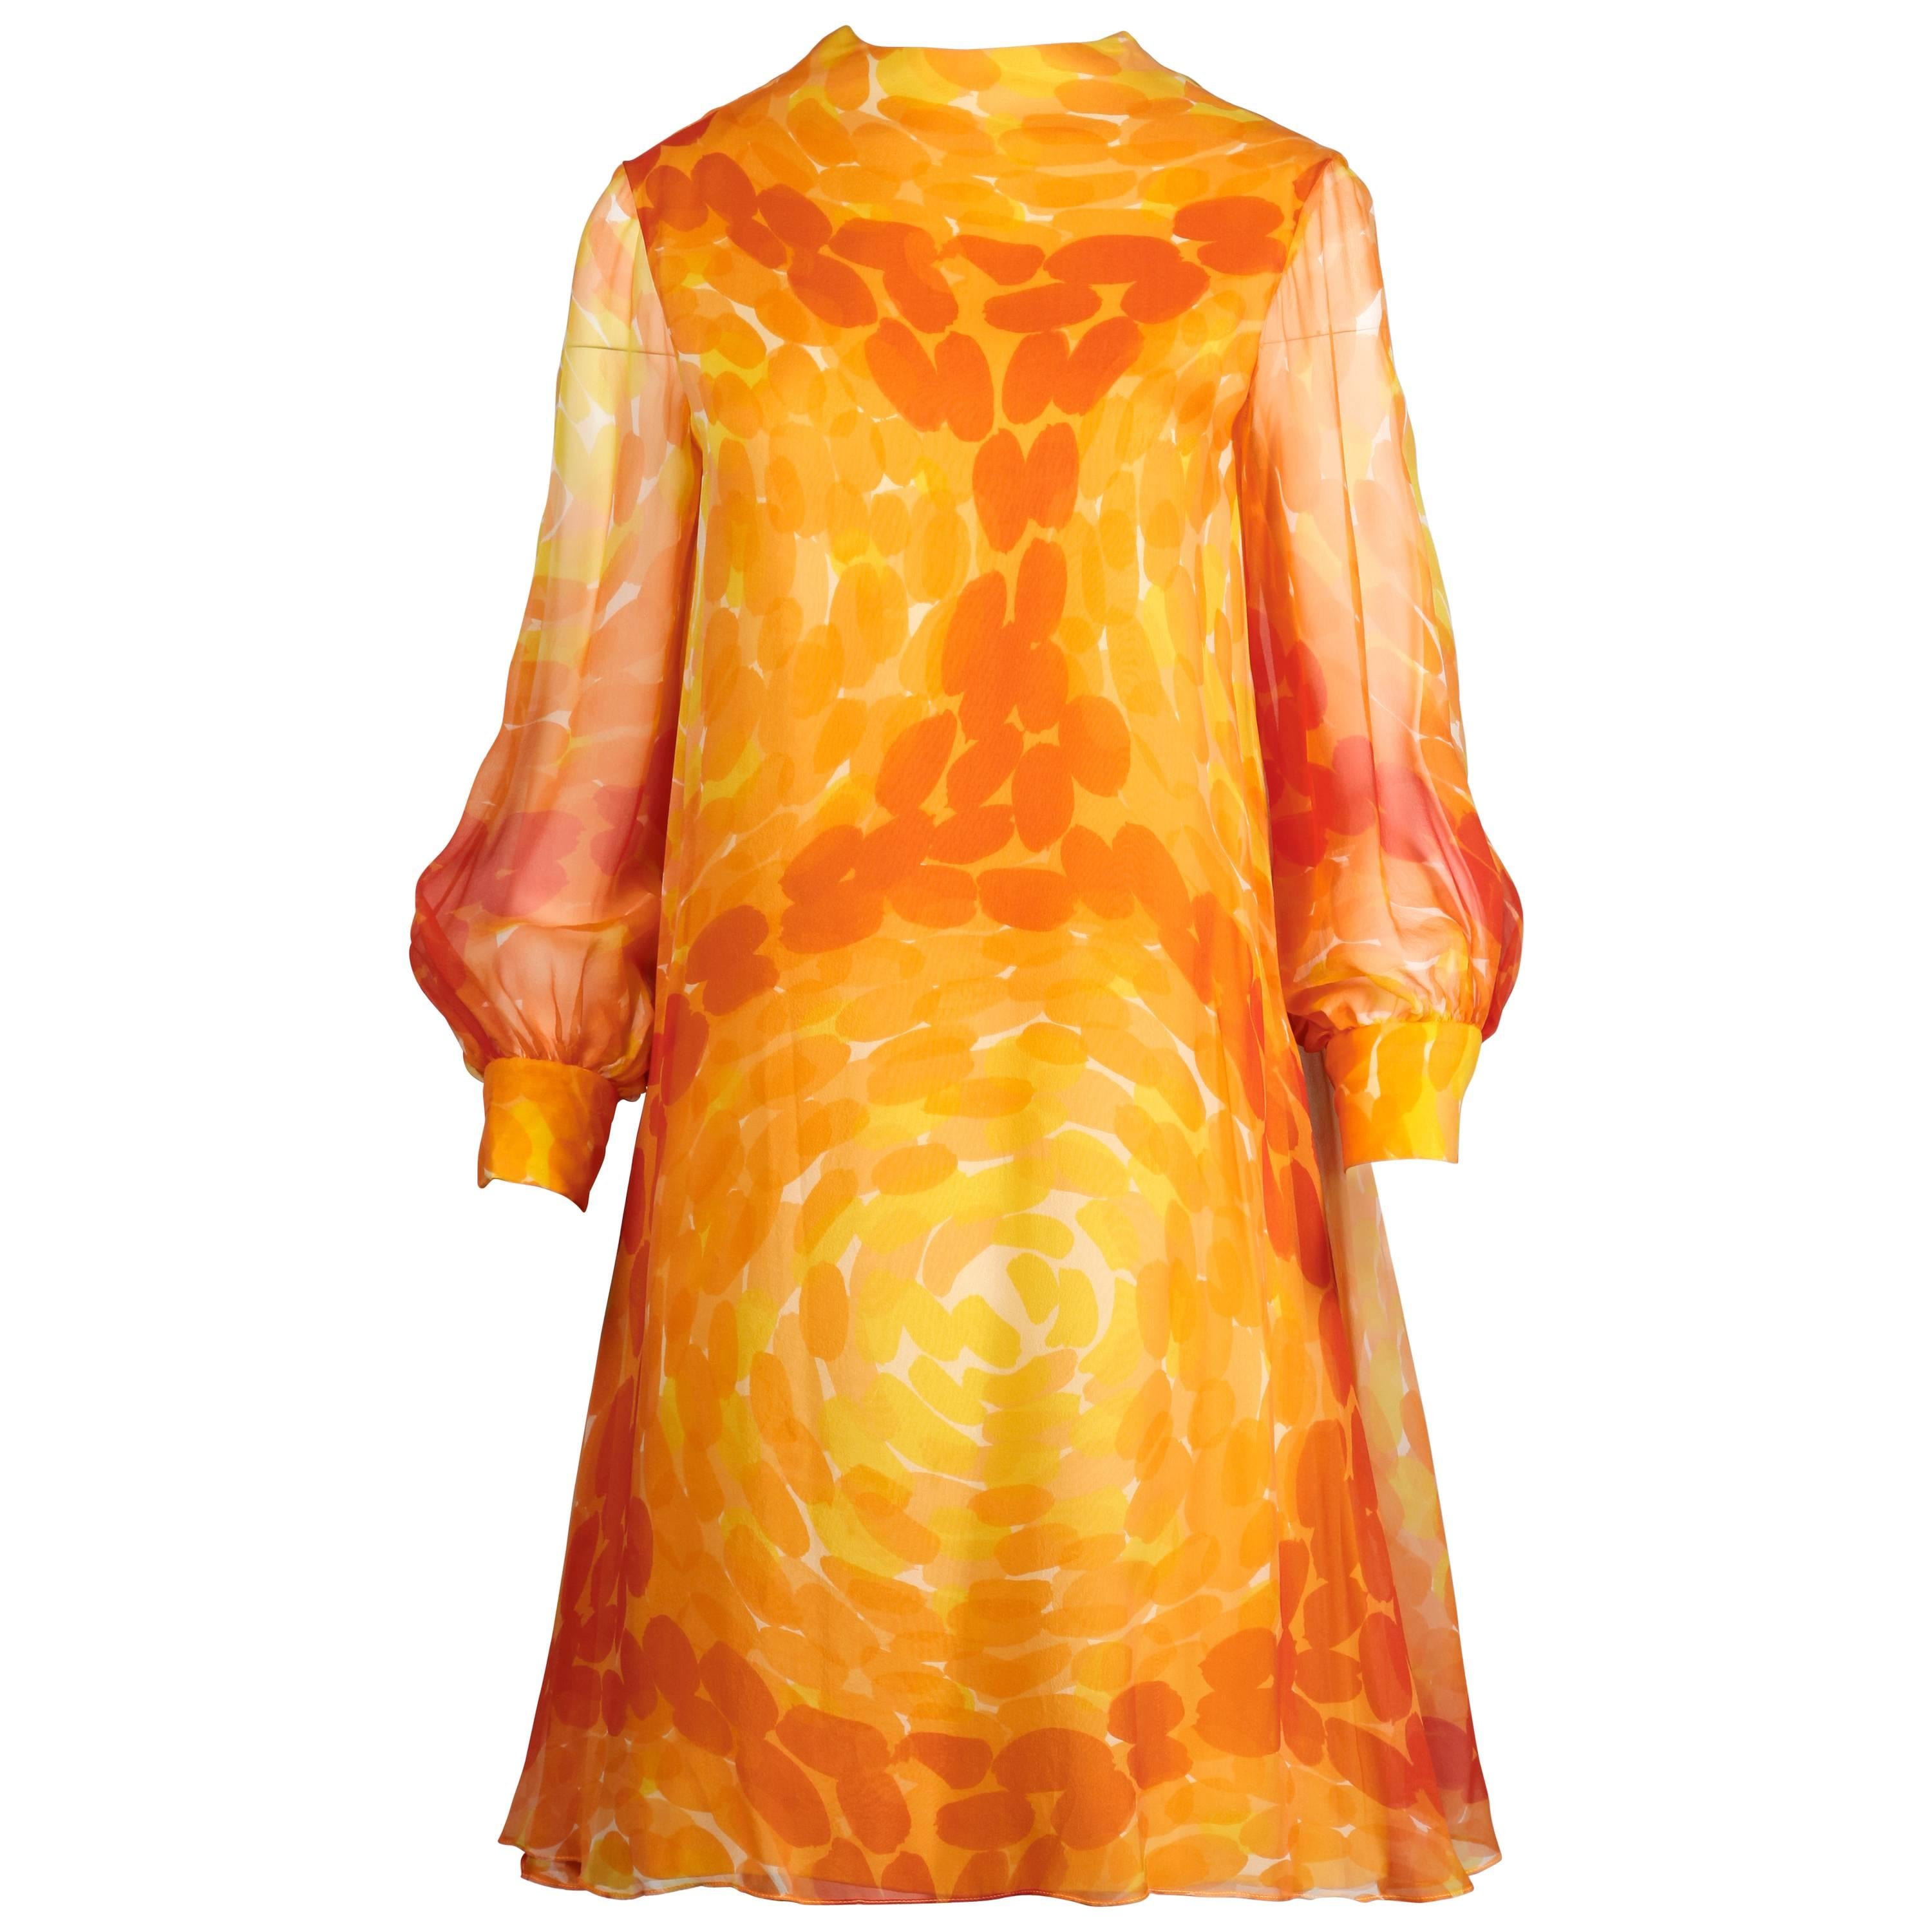 Pab 1960s Vintage Screen Print Silk Chiffon Mod Dress in Yellow and Orange For Sale